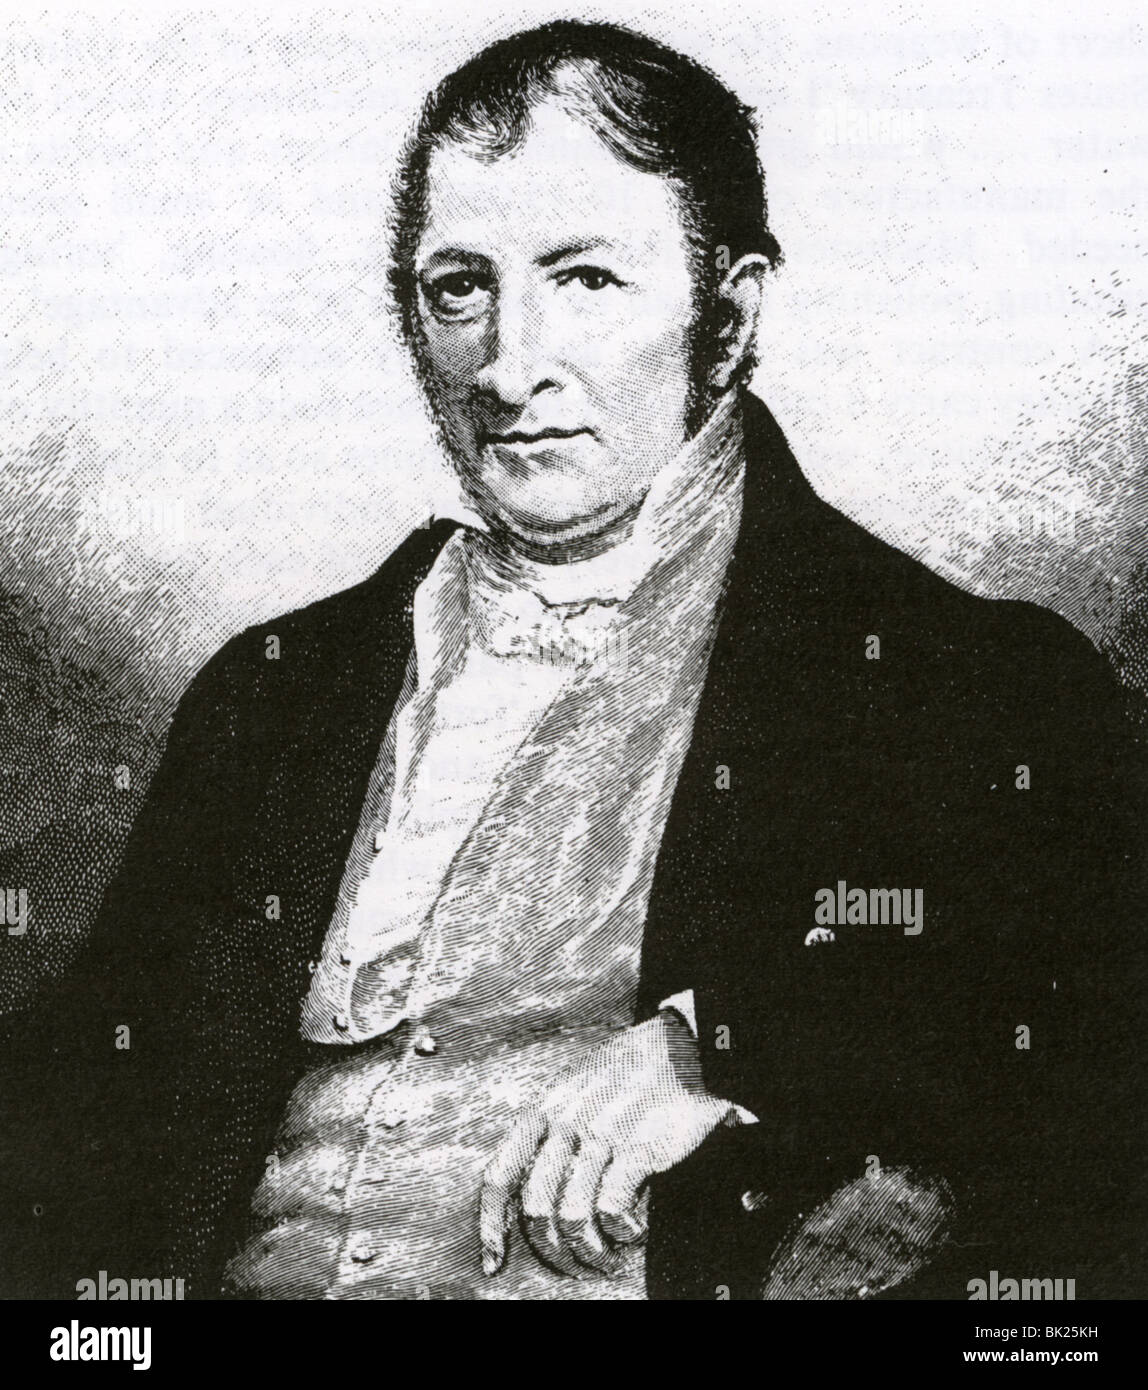 ELI WHITNEY  - US inventor (1765-1825) Stock Photo